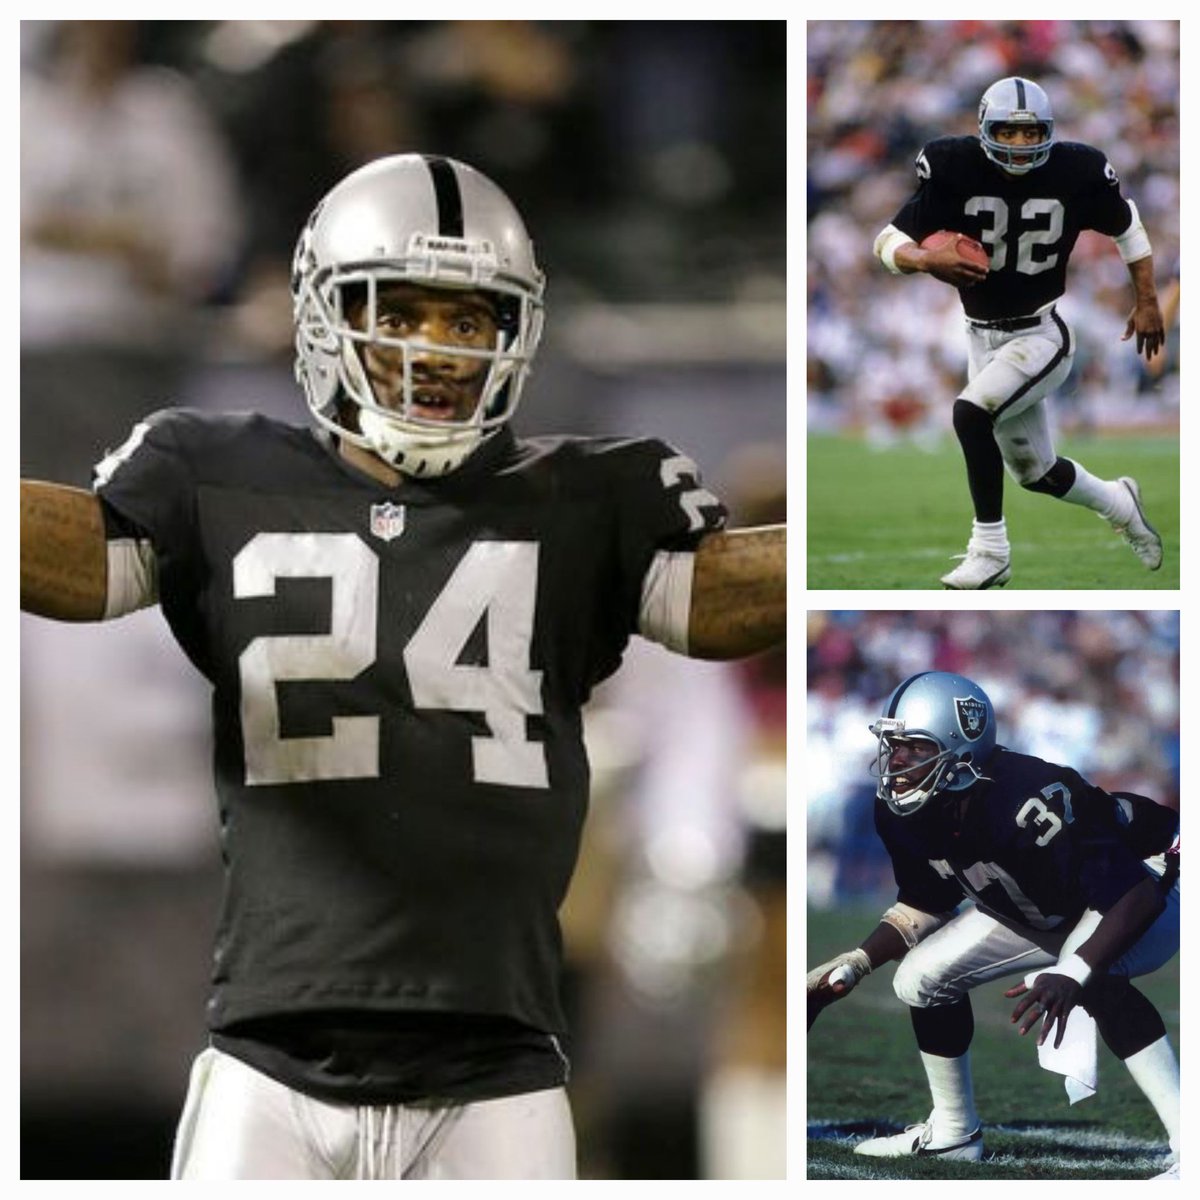 3 alltime favorite #Raiders. ..#98 on his way...who you got? #RaiderNation